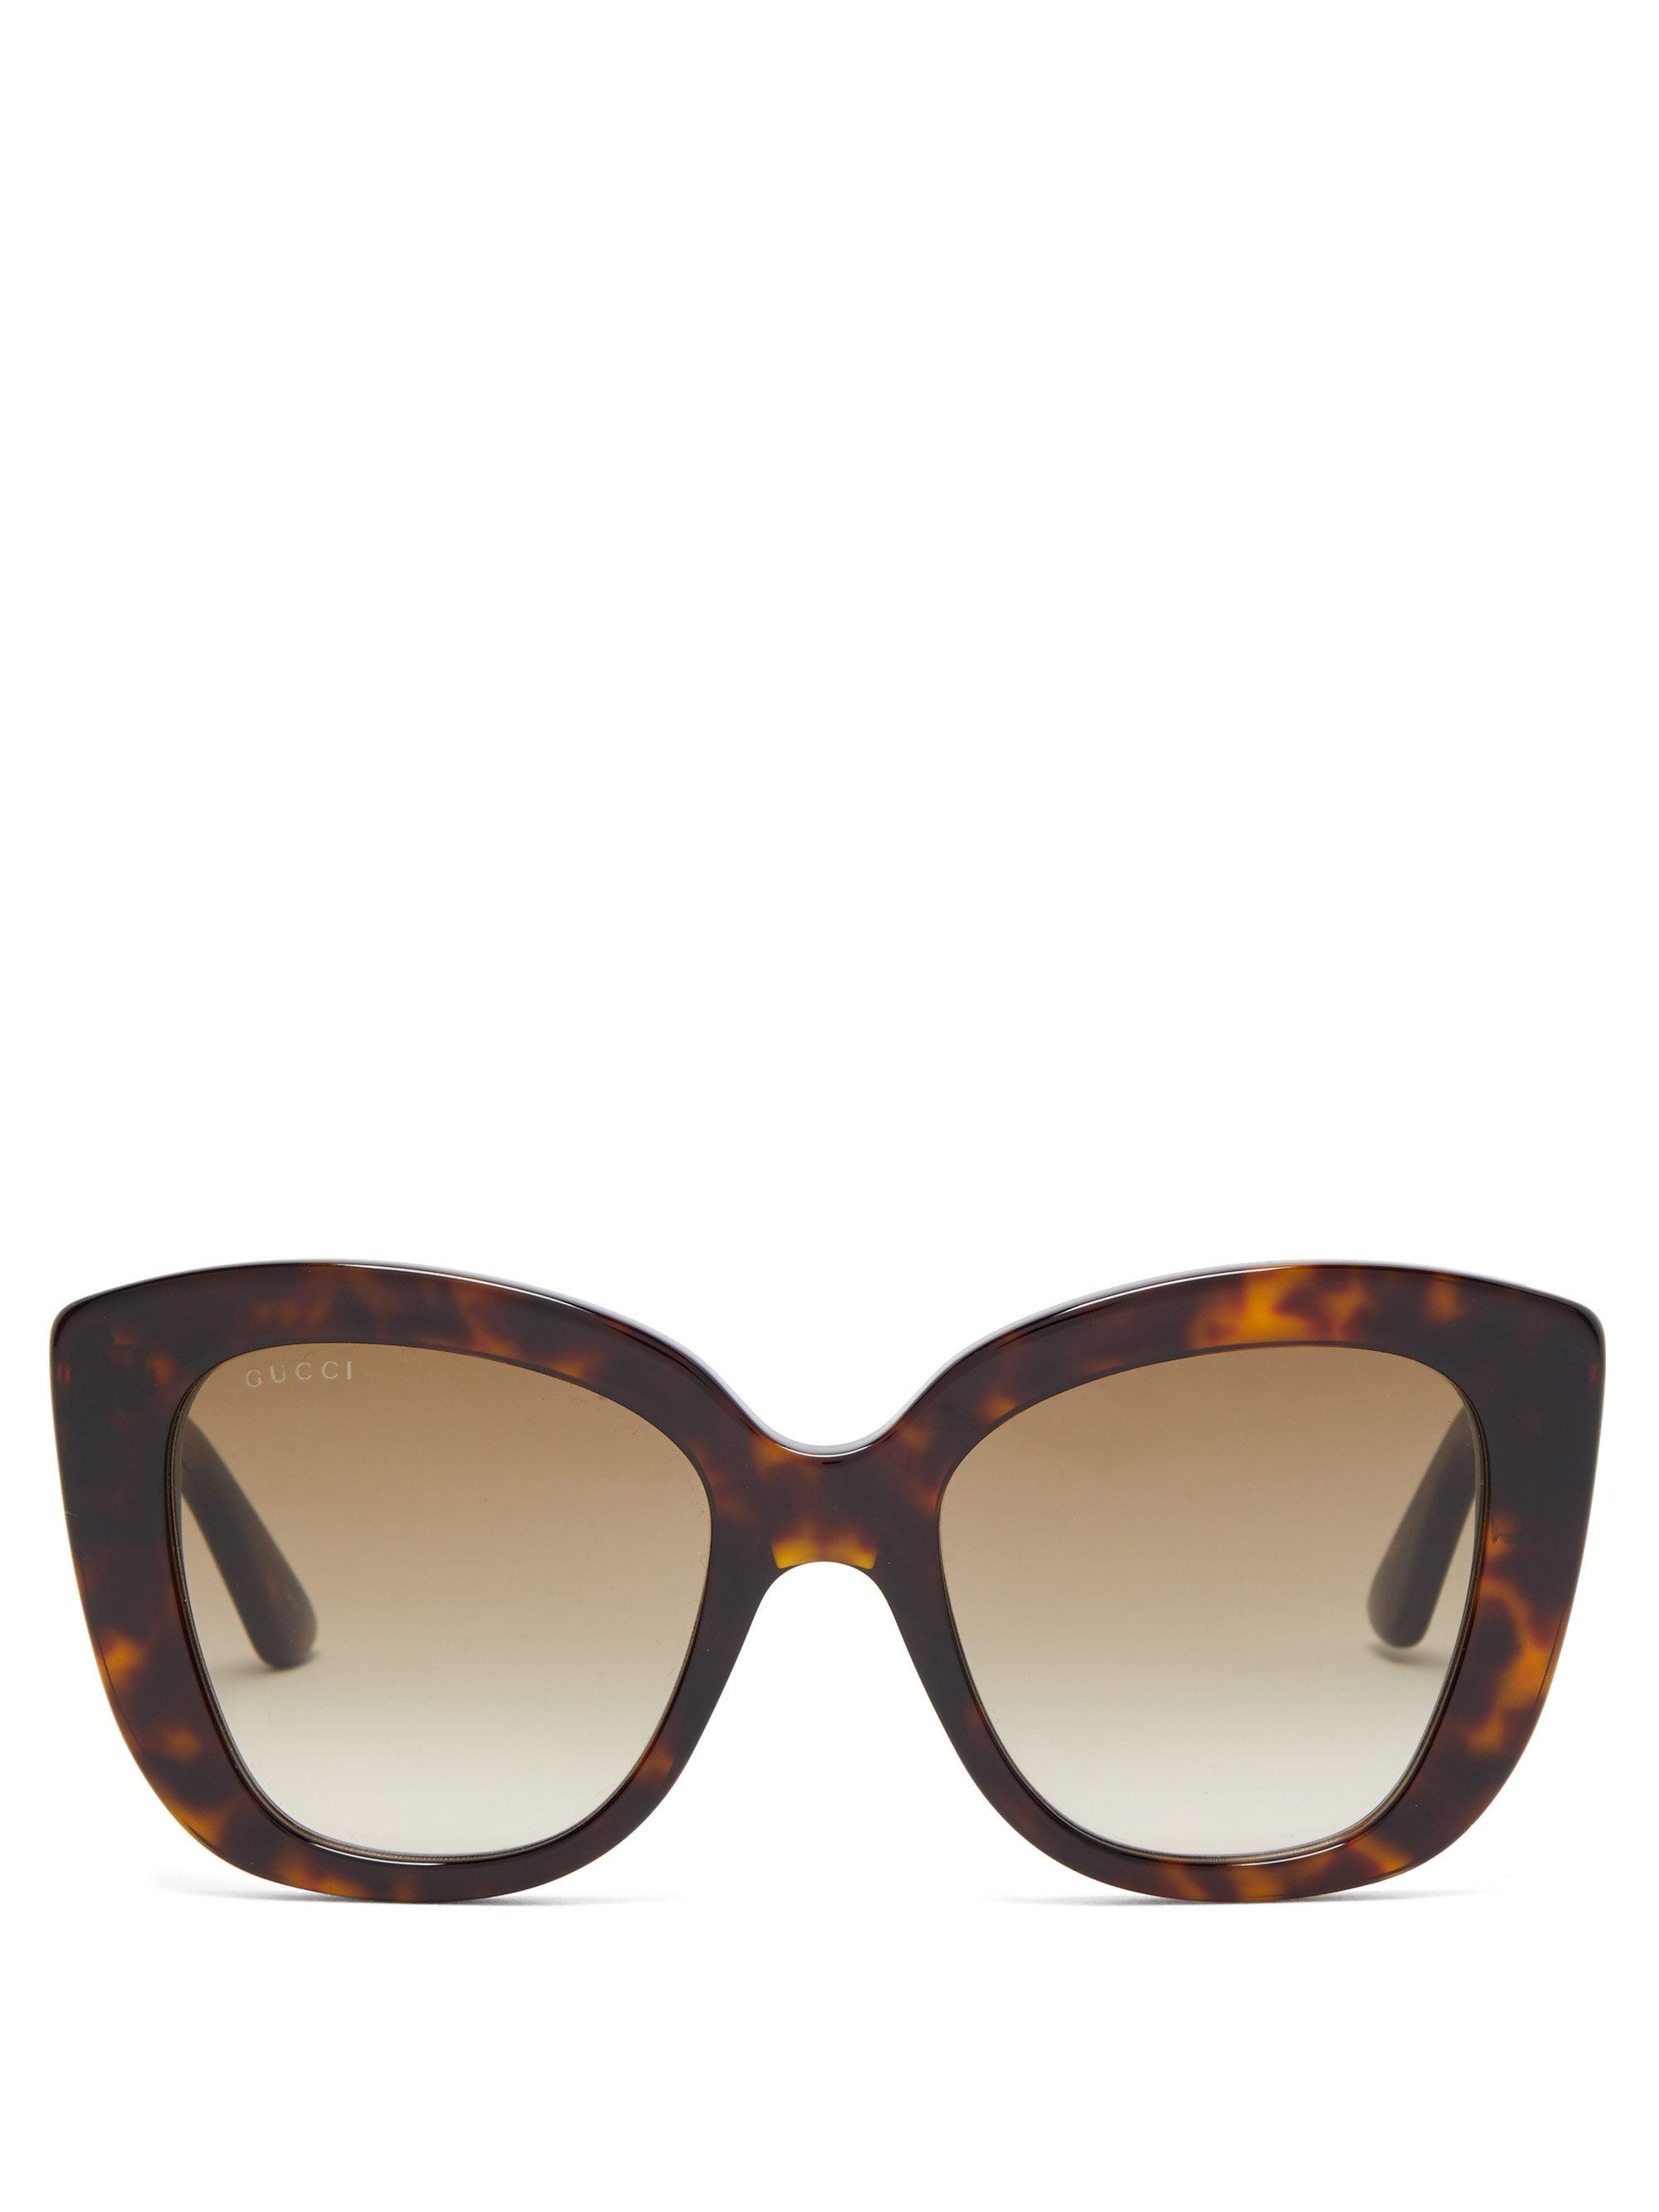 Gucci Cat-eye Tortoiseshell-acetate Sunglasses in Brown - Lyst